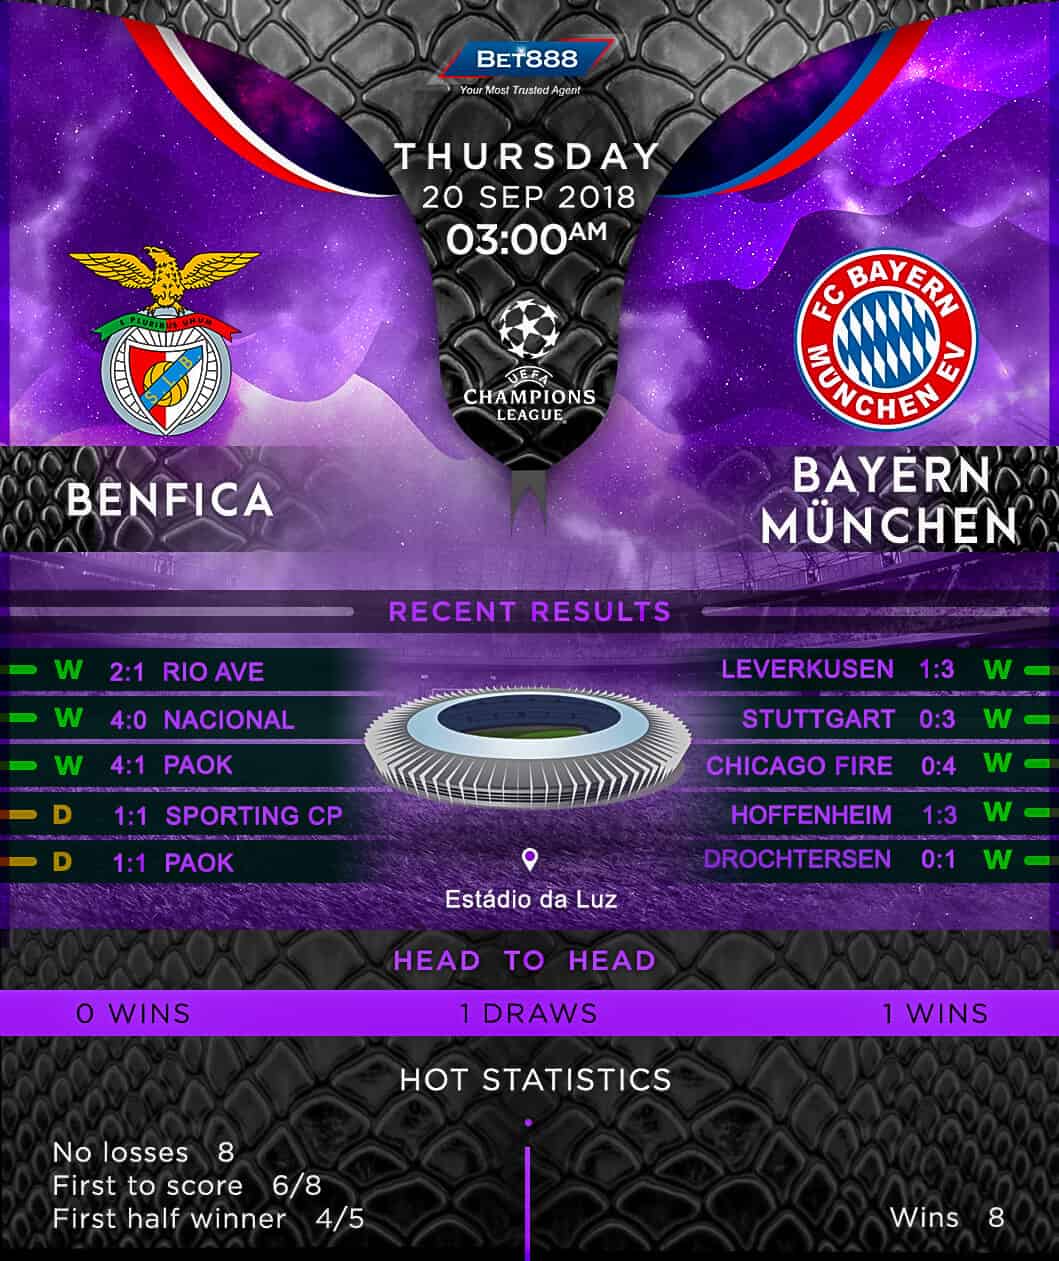 Benfica vs Bayern Munich 20/09/18